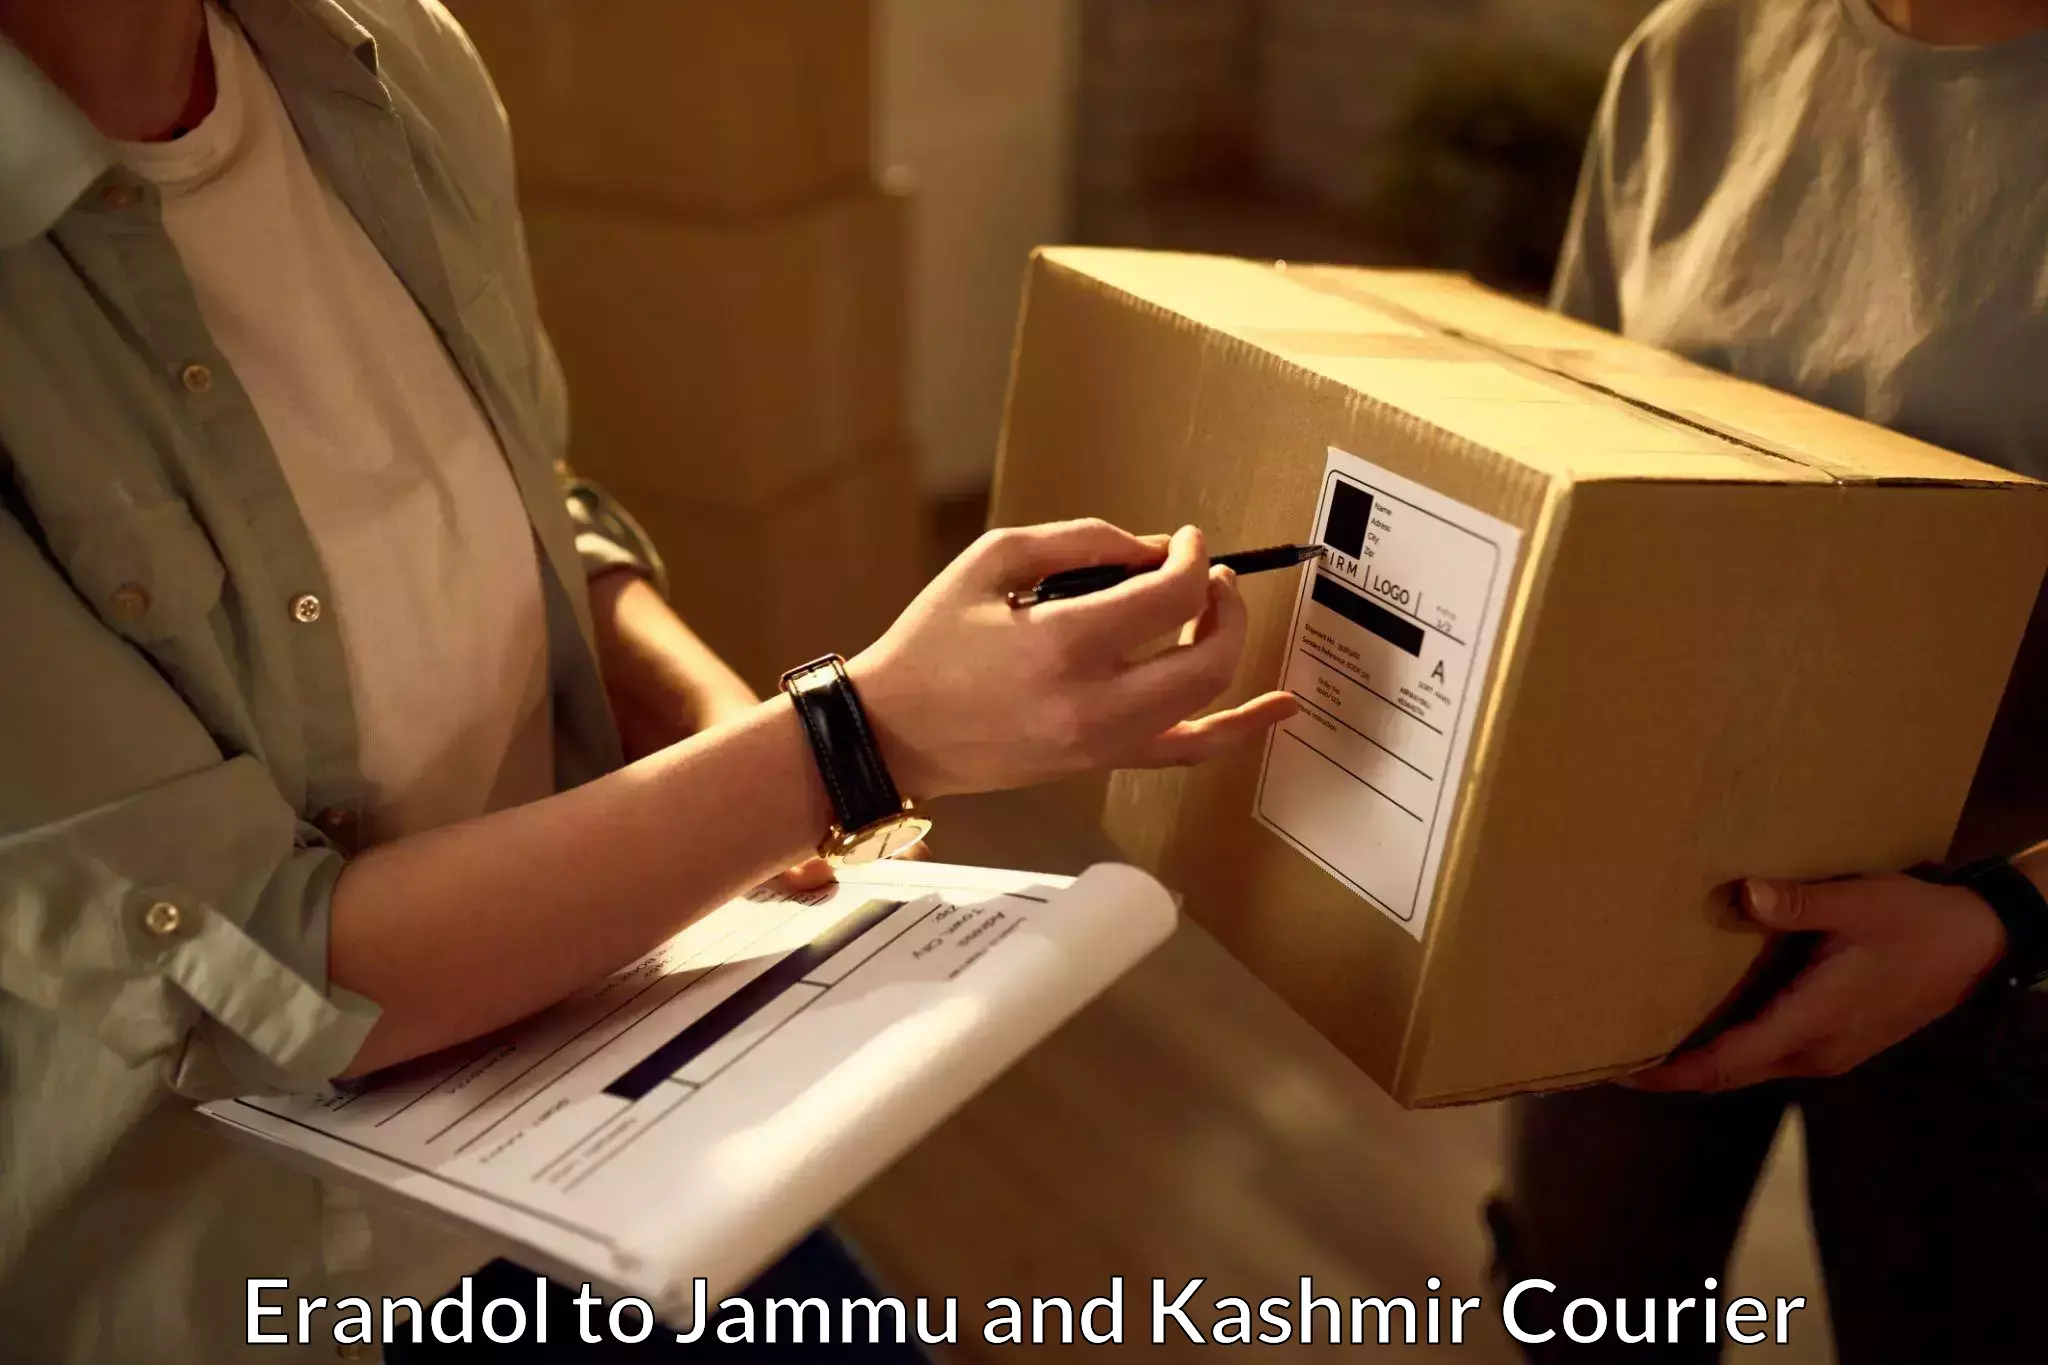 Easy access courier services Erandol to Srinagar Kashmir